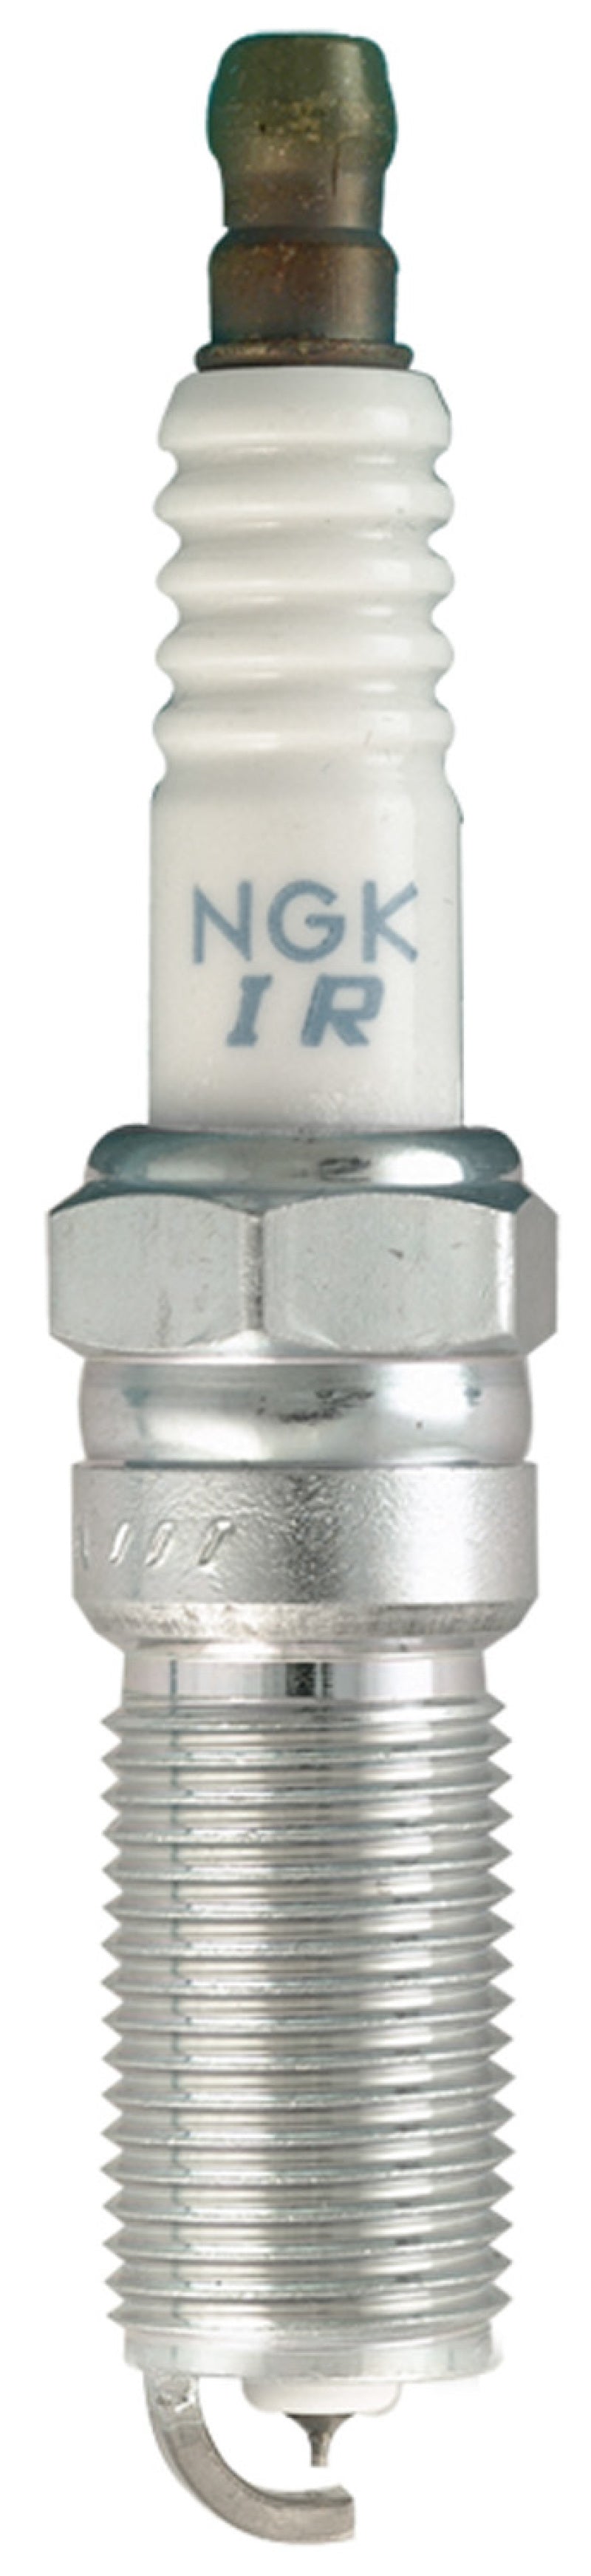 NGK Laser Iridium/Platinum Spark Plug Box of 4 (ILTR7E9)